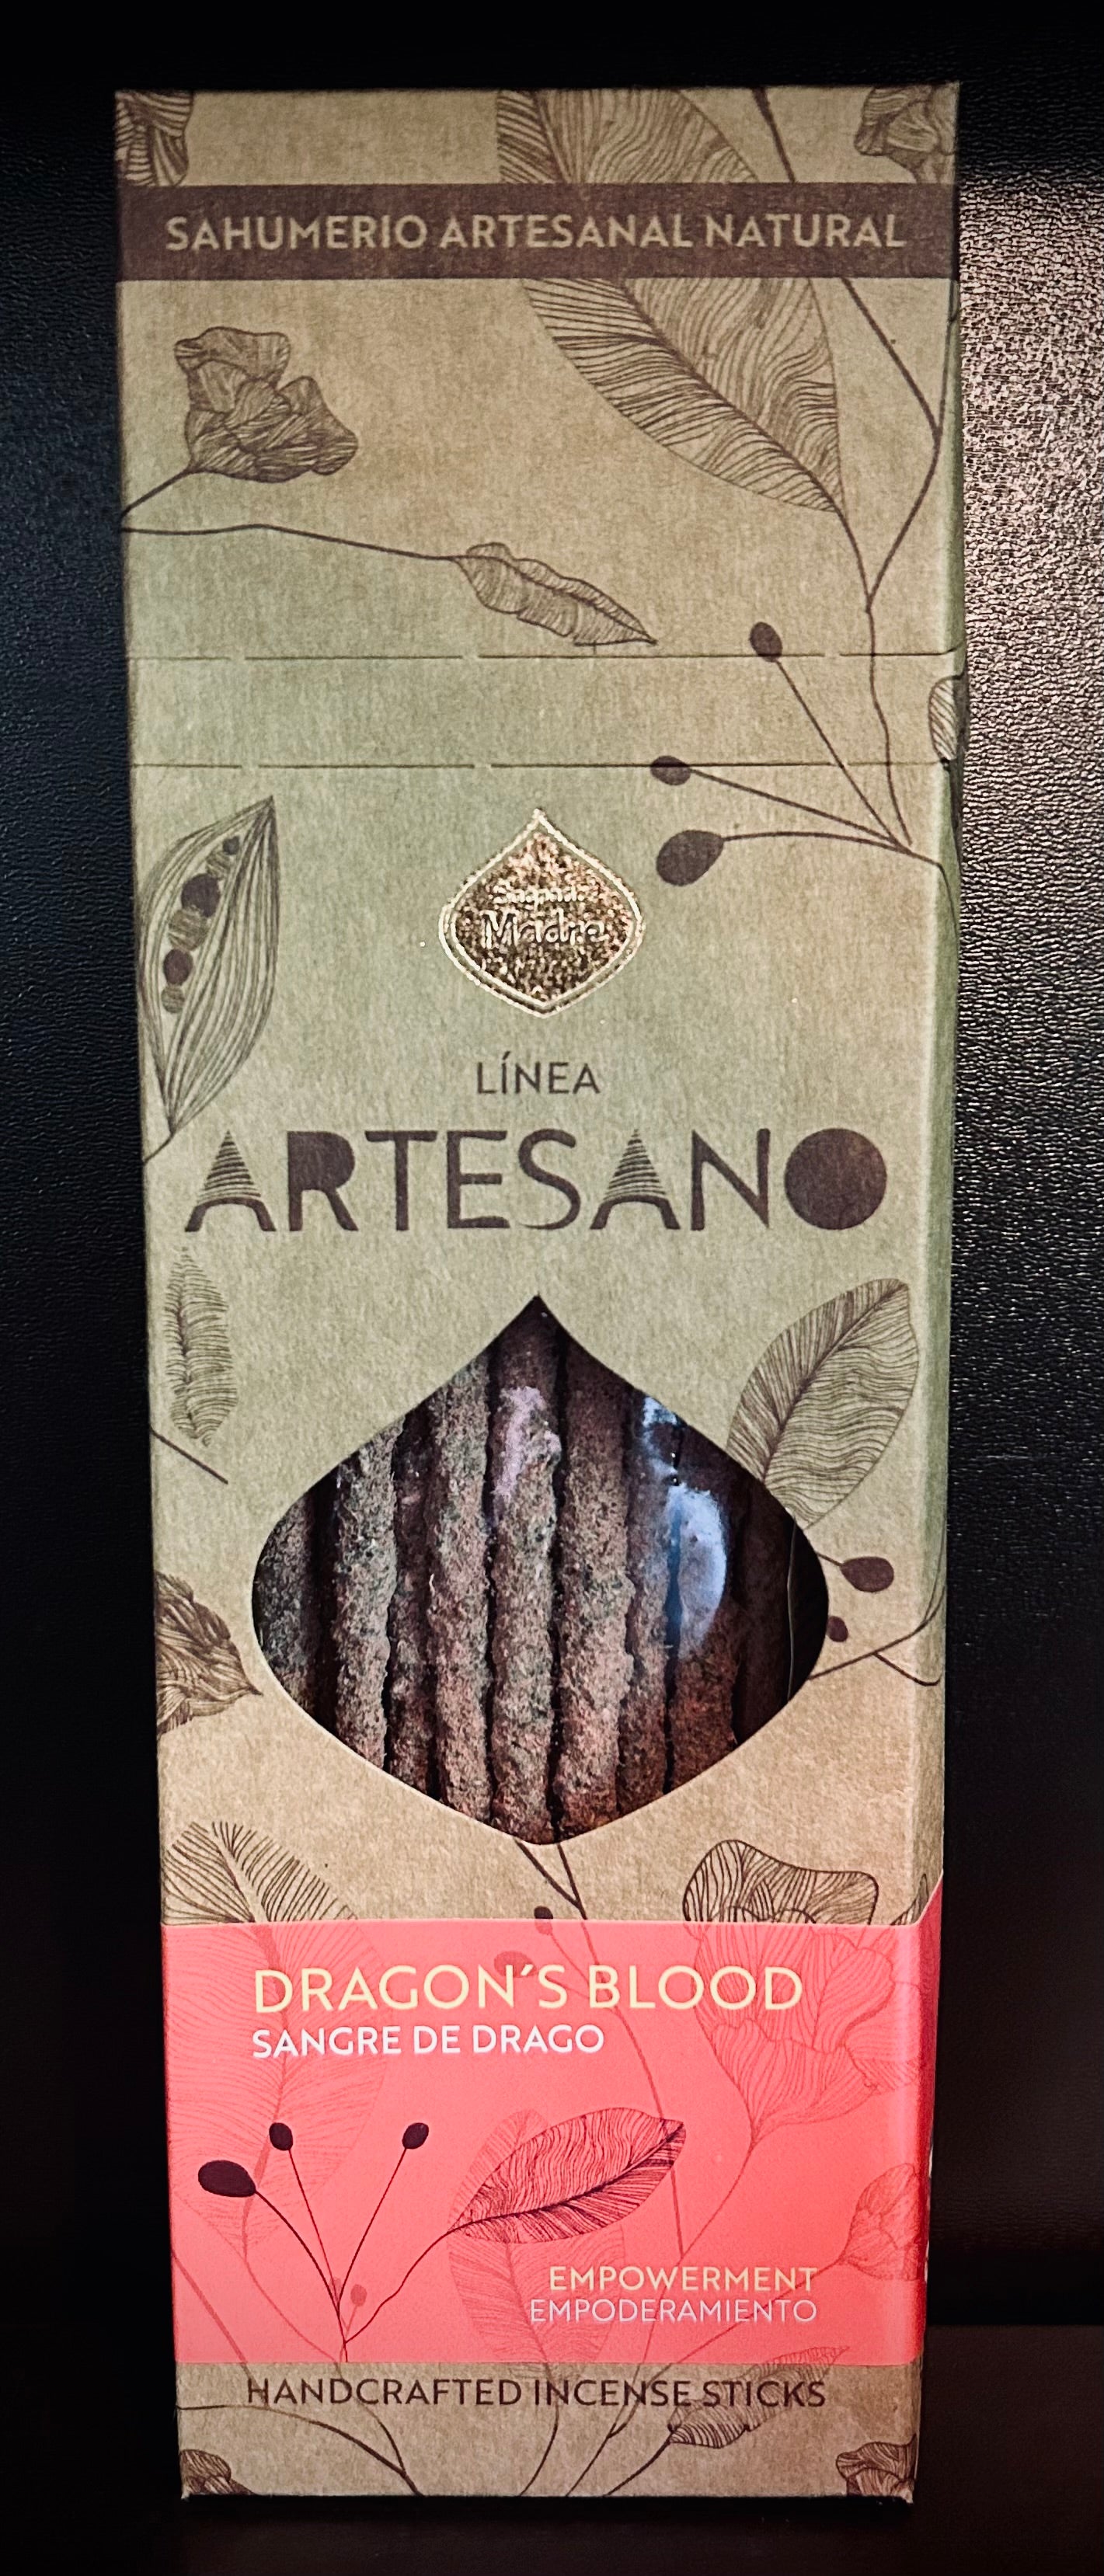 Artesano Hand Crafted Incense Sticks